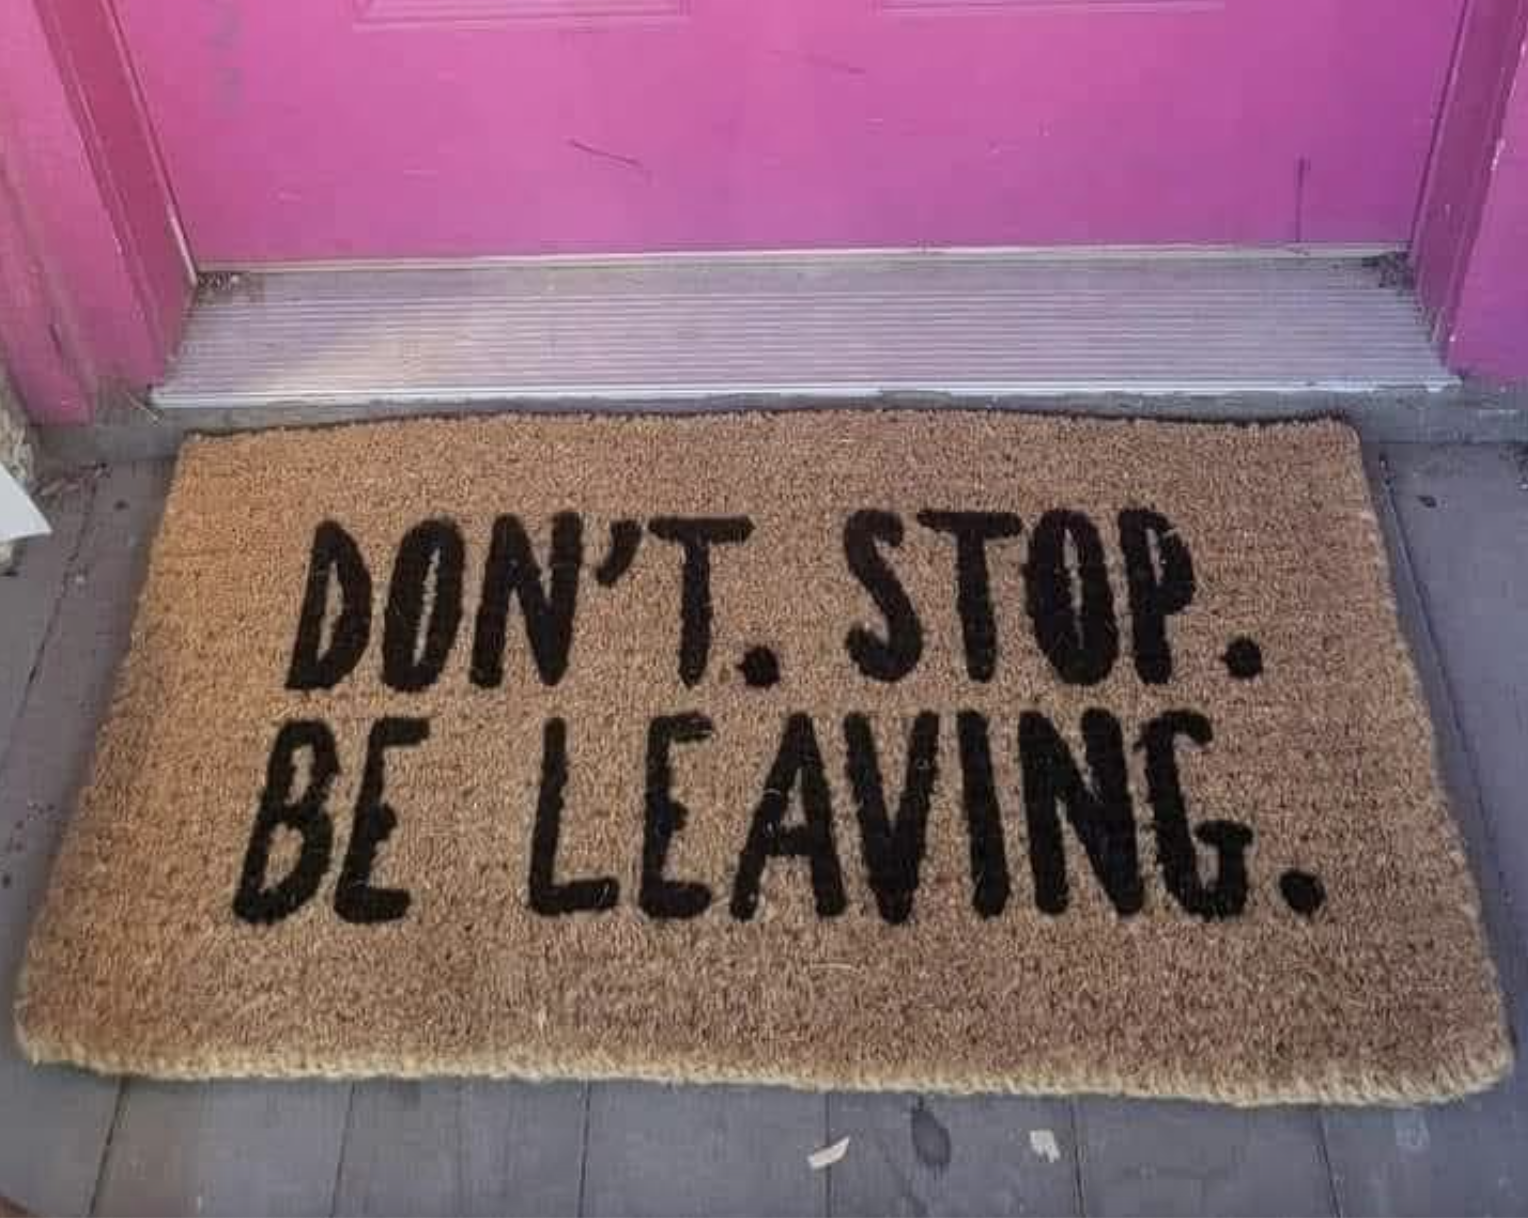 door mat says dont. stop. be leaving